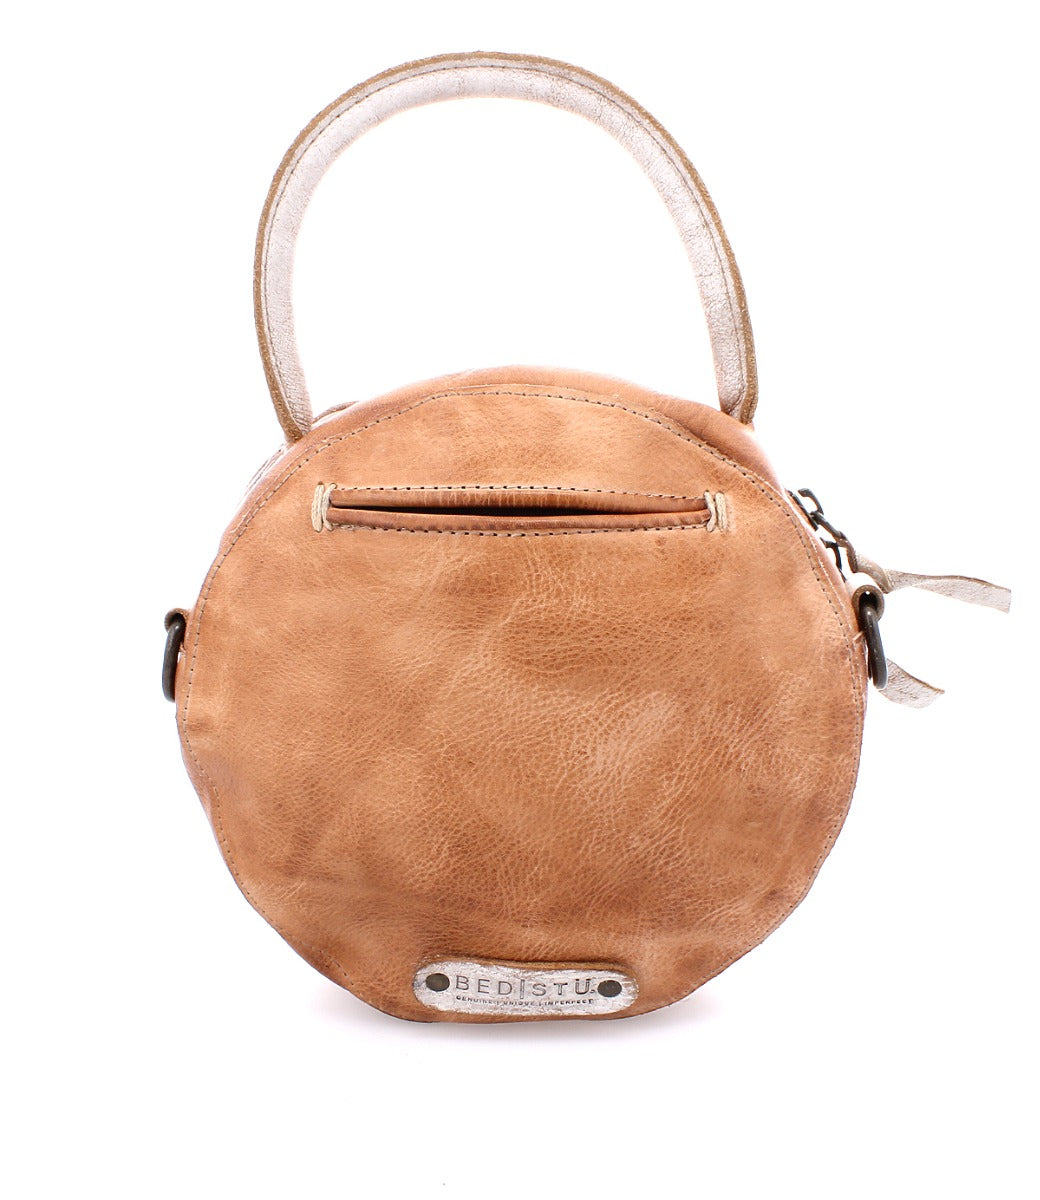 A tan Arenfield handbag from Bed Stu.